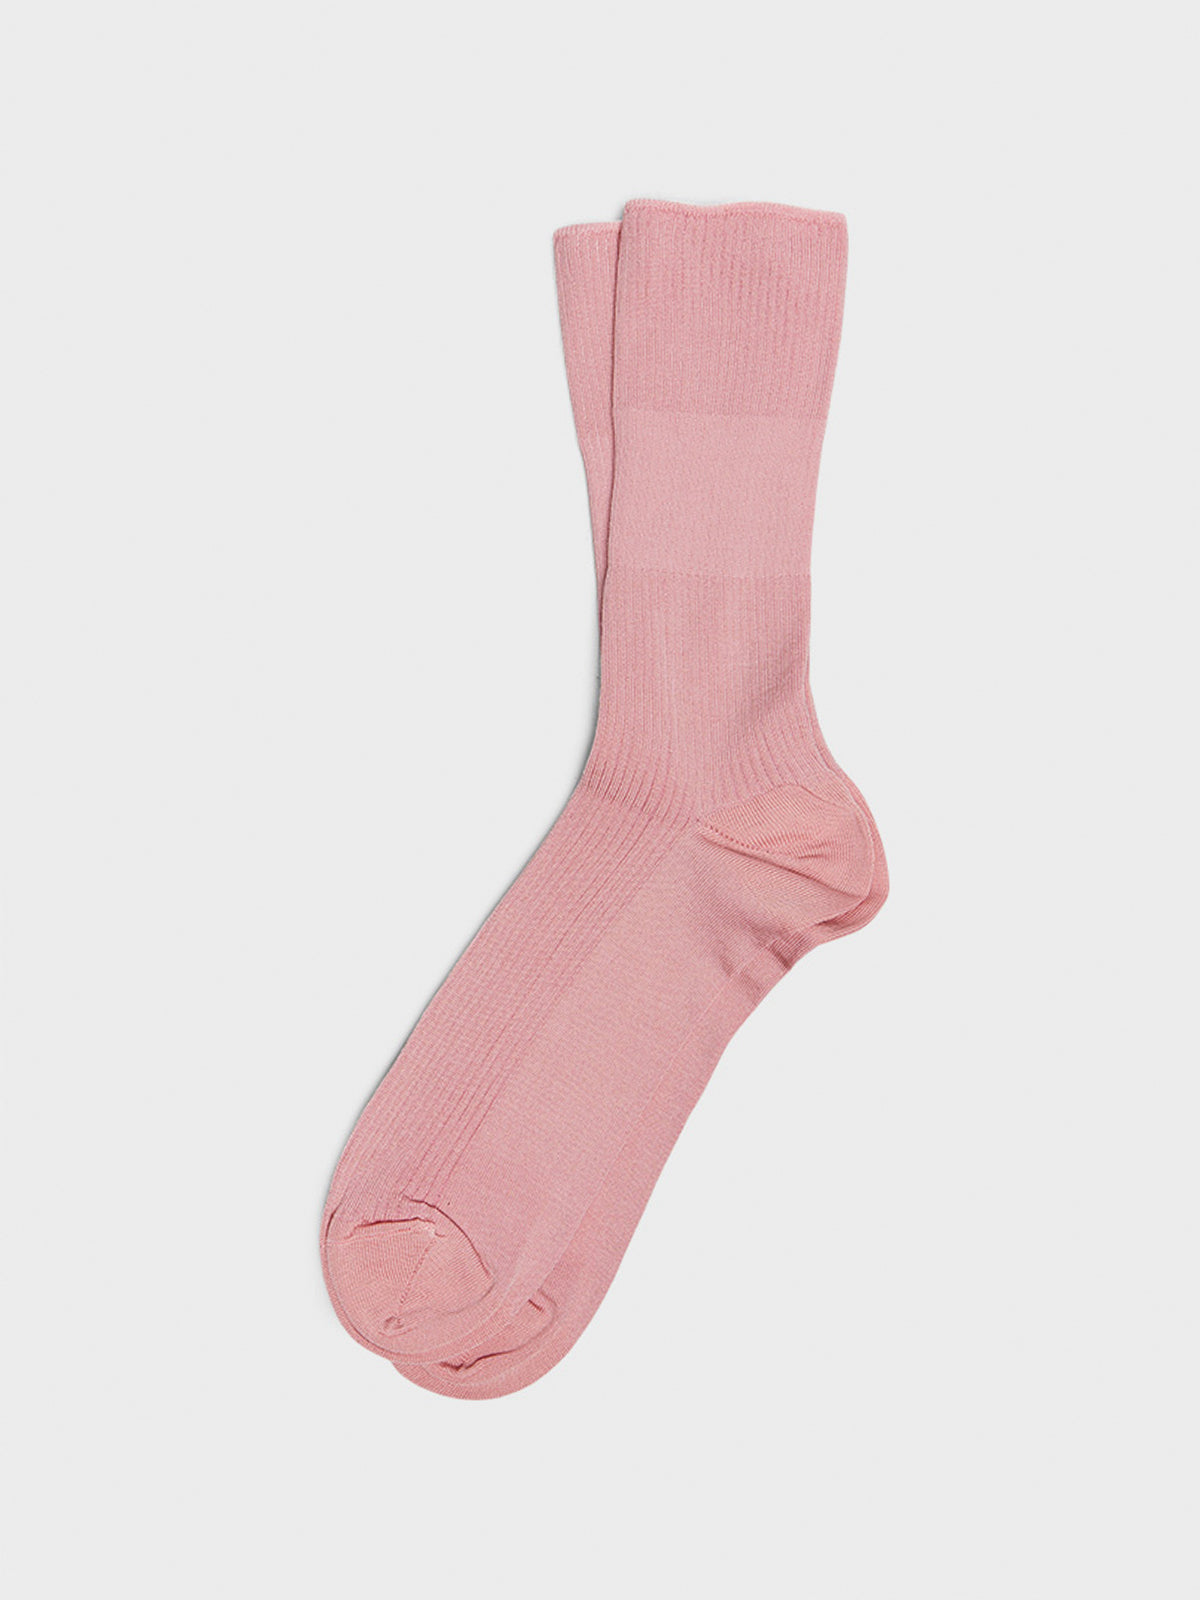 Mrs. Hosiery - Mrs. Supreme Cotton Socks in Pink